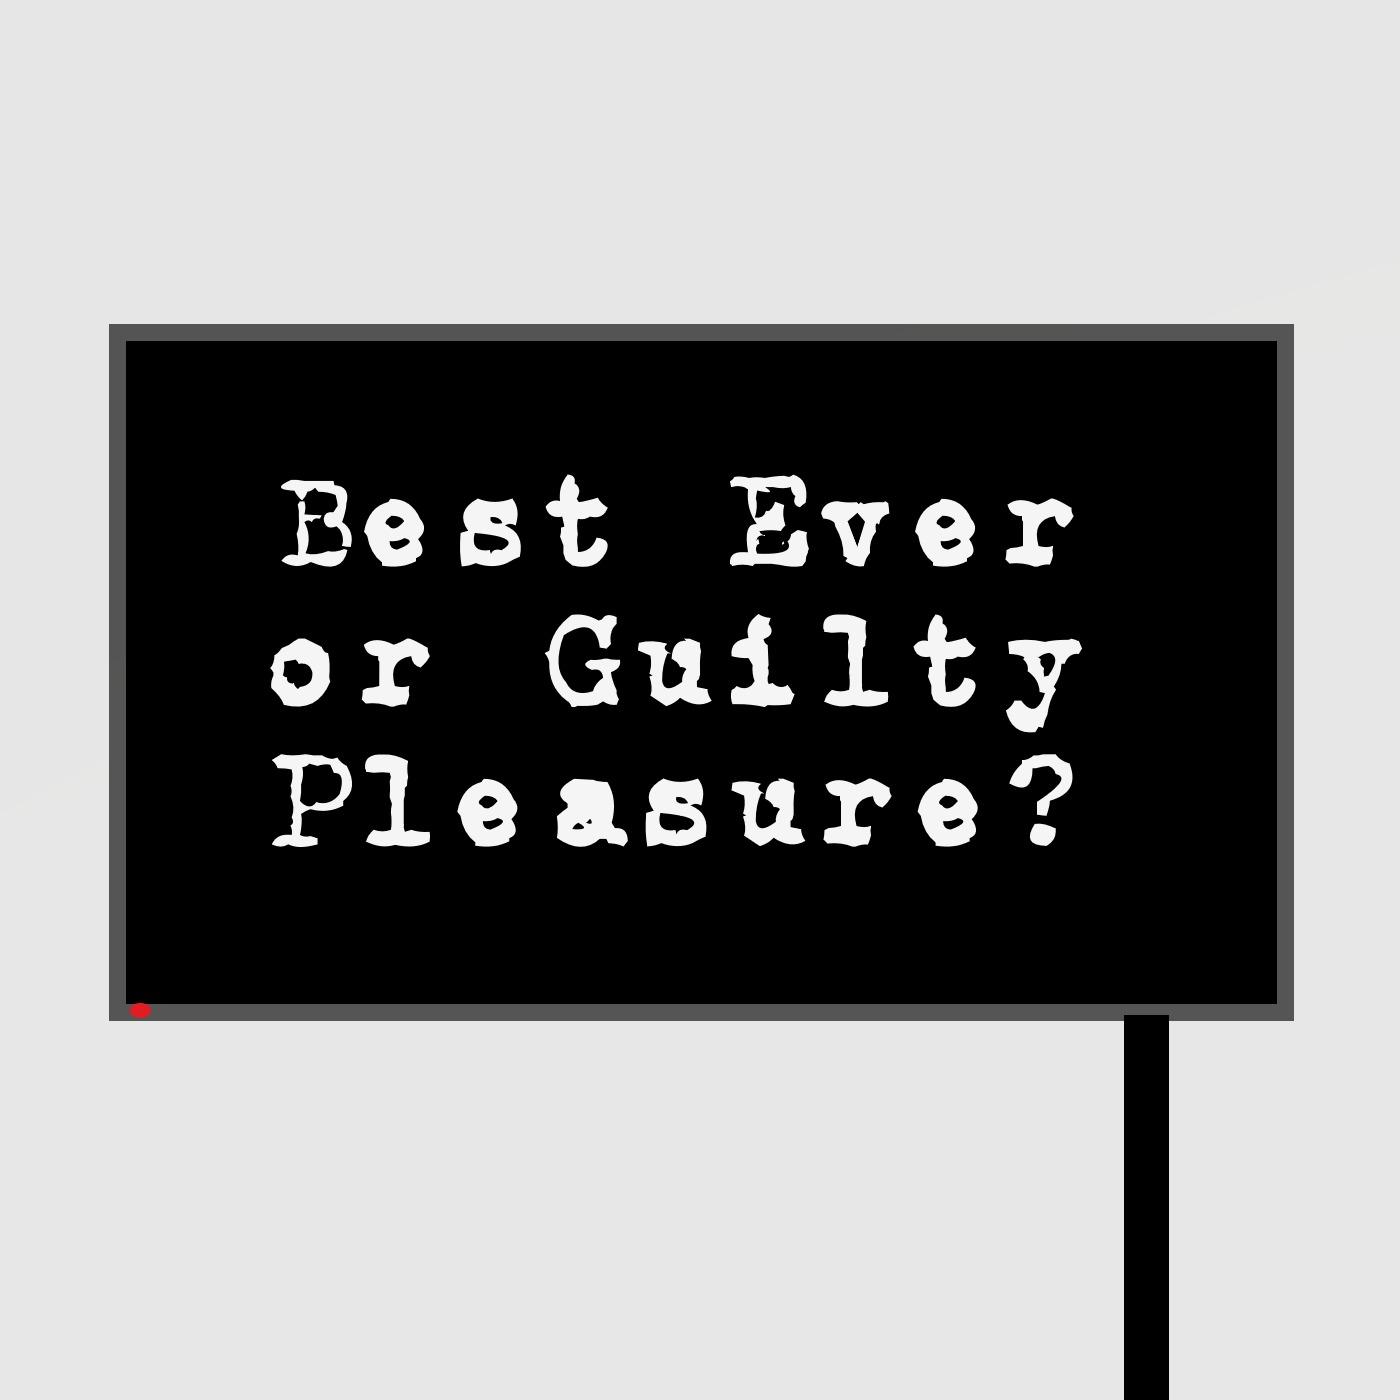 Best Ever or Guilty Pleasure?